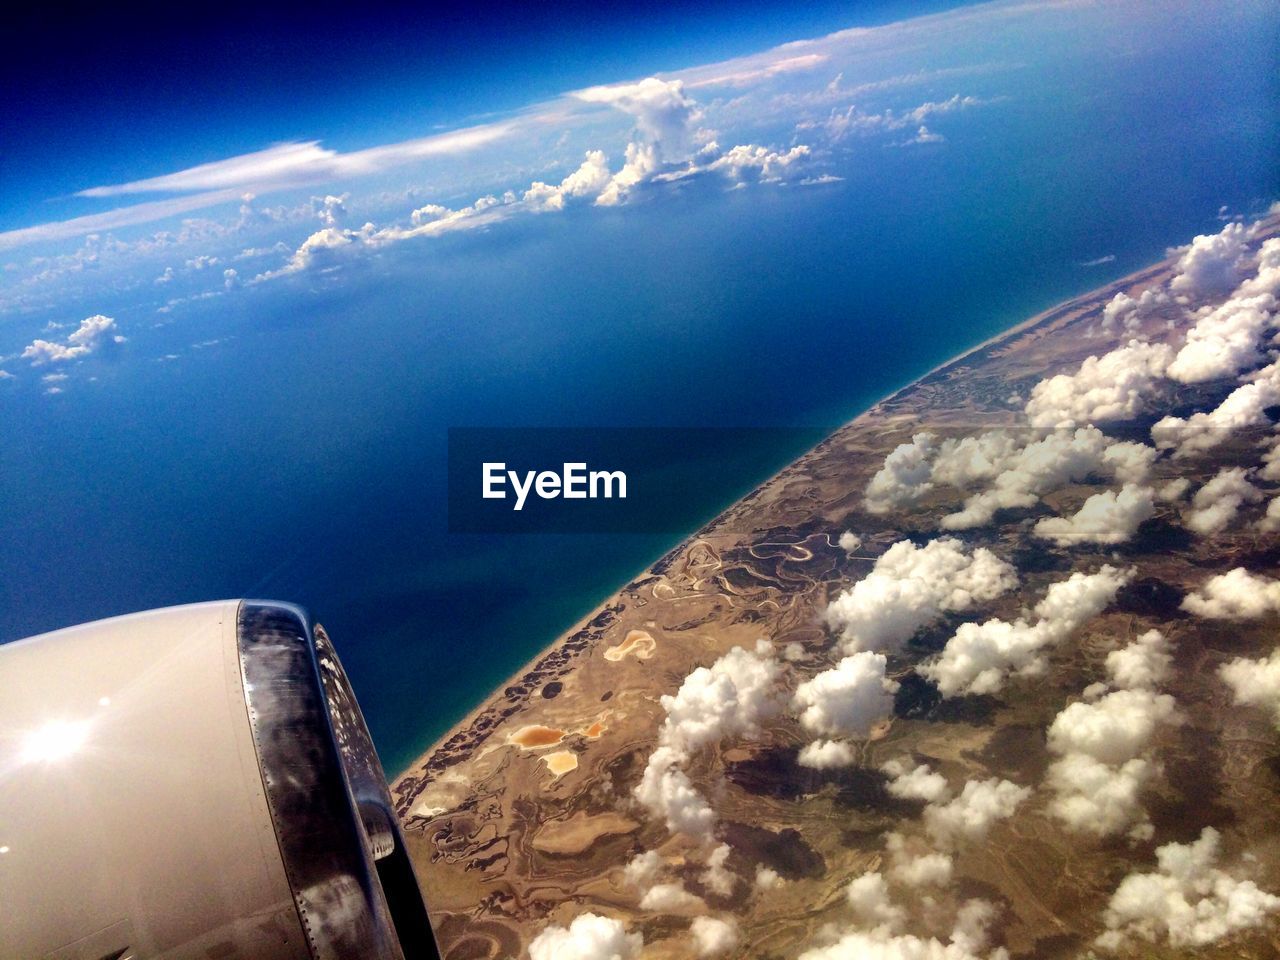 Cropped image of jet engine over landscape and ocean